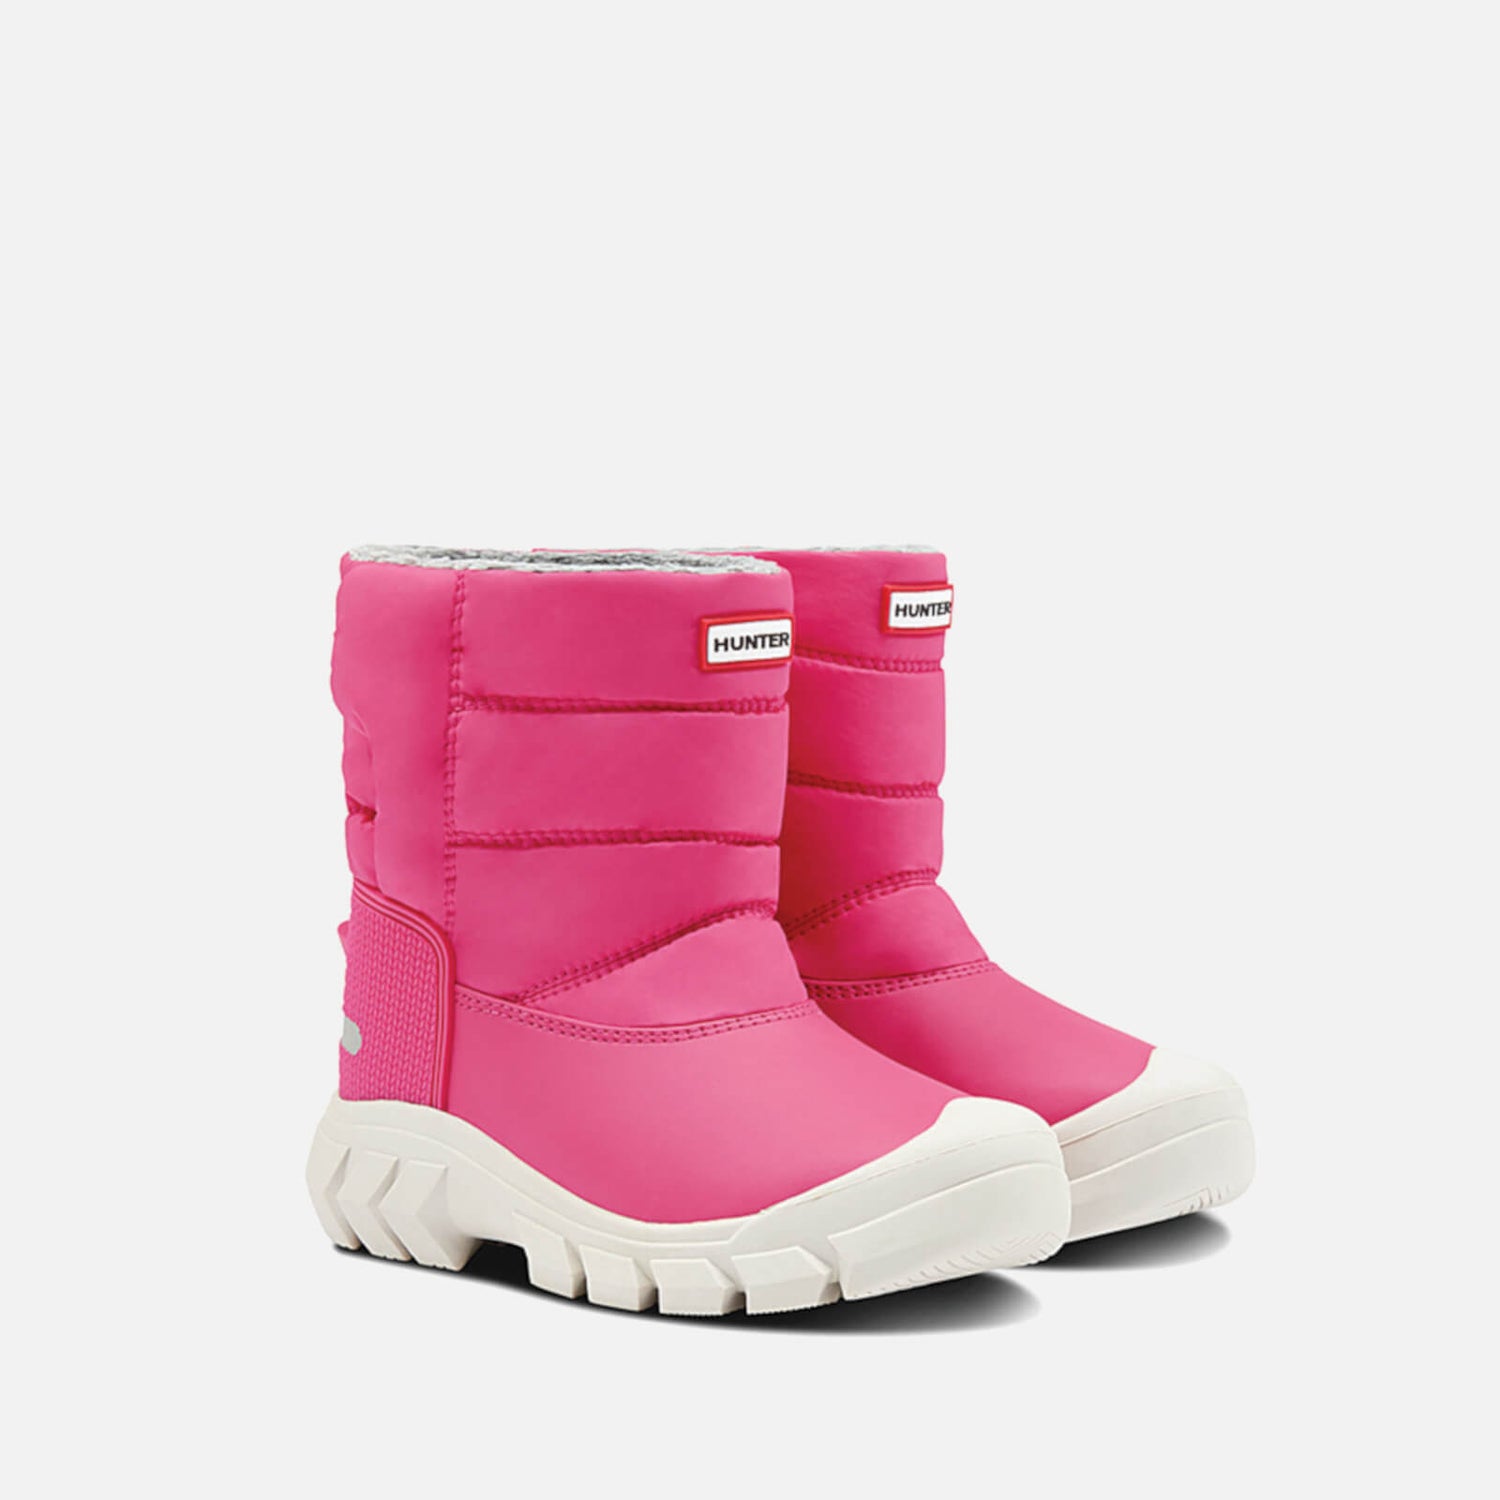 Hunter Original Kids' Snow Boots - bright pink | TheHut.com